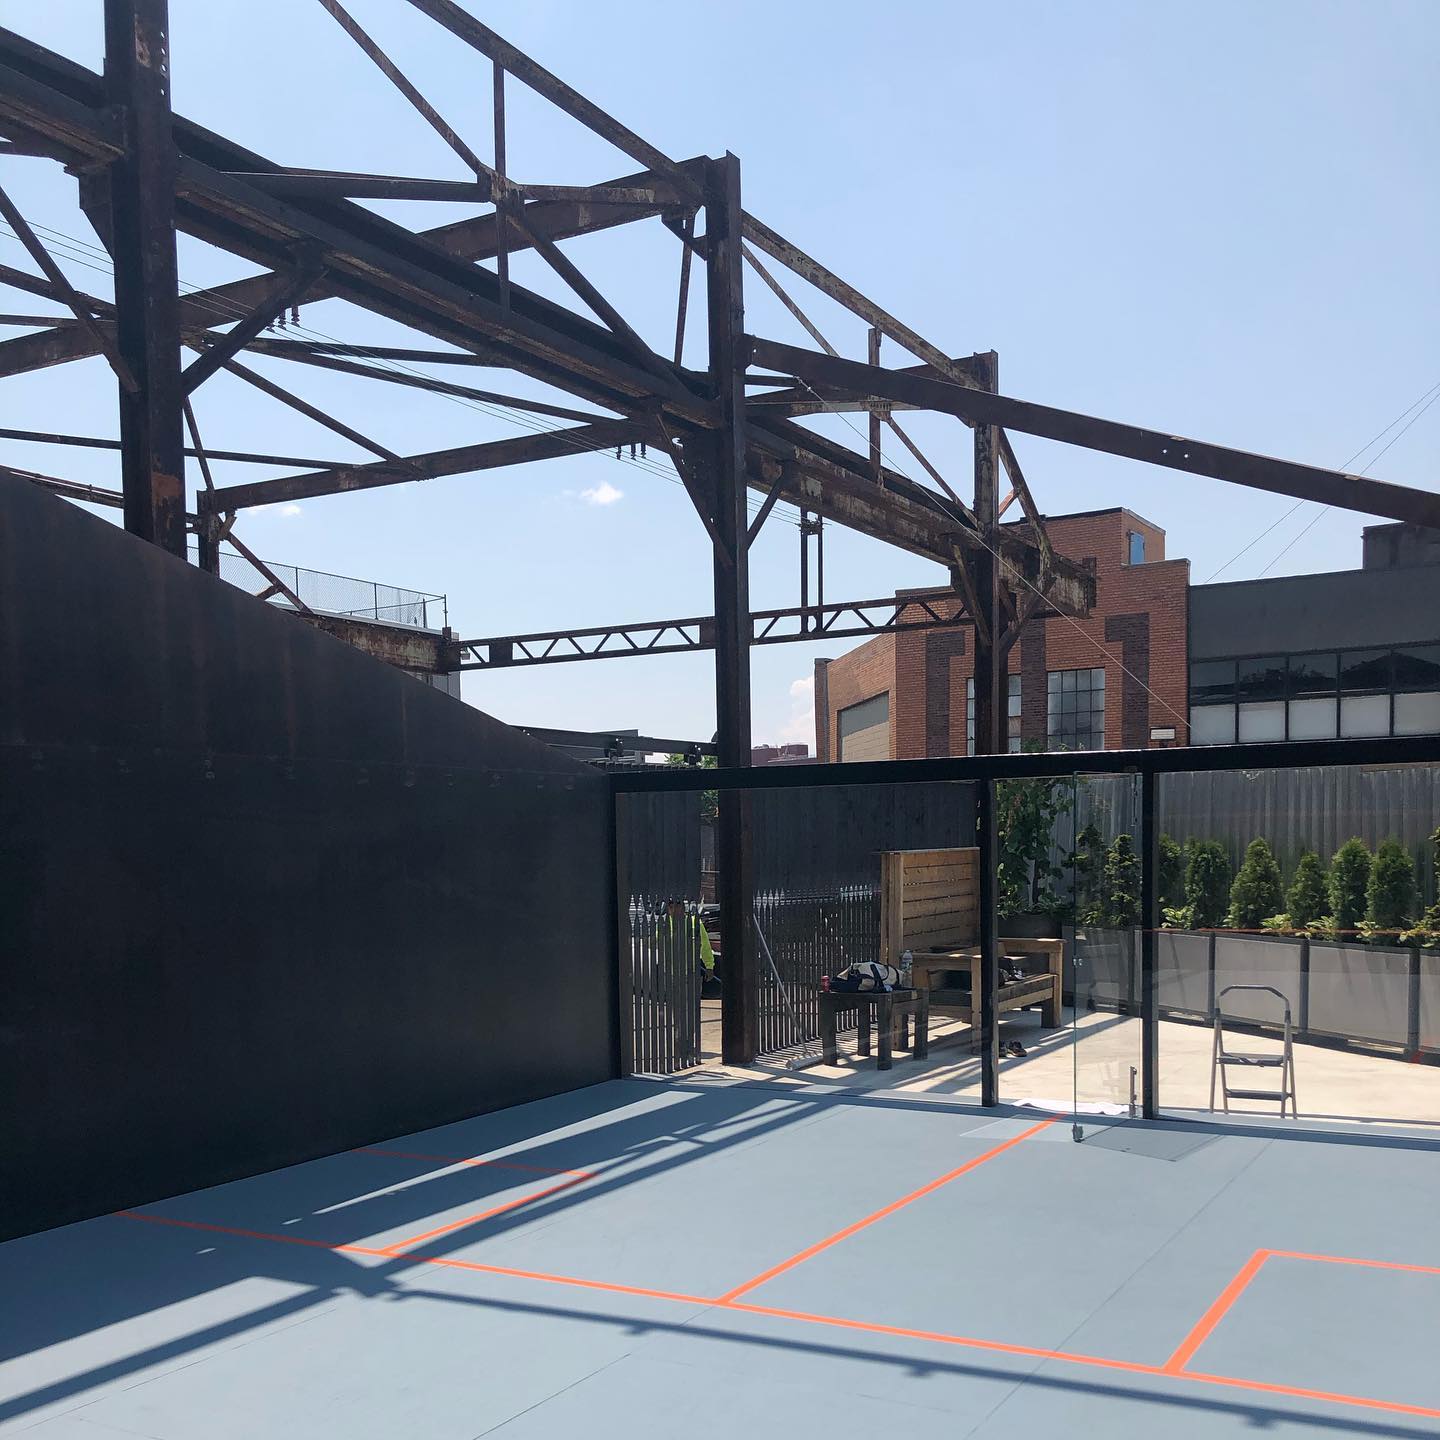 New York outdoor steel squash court